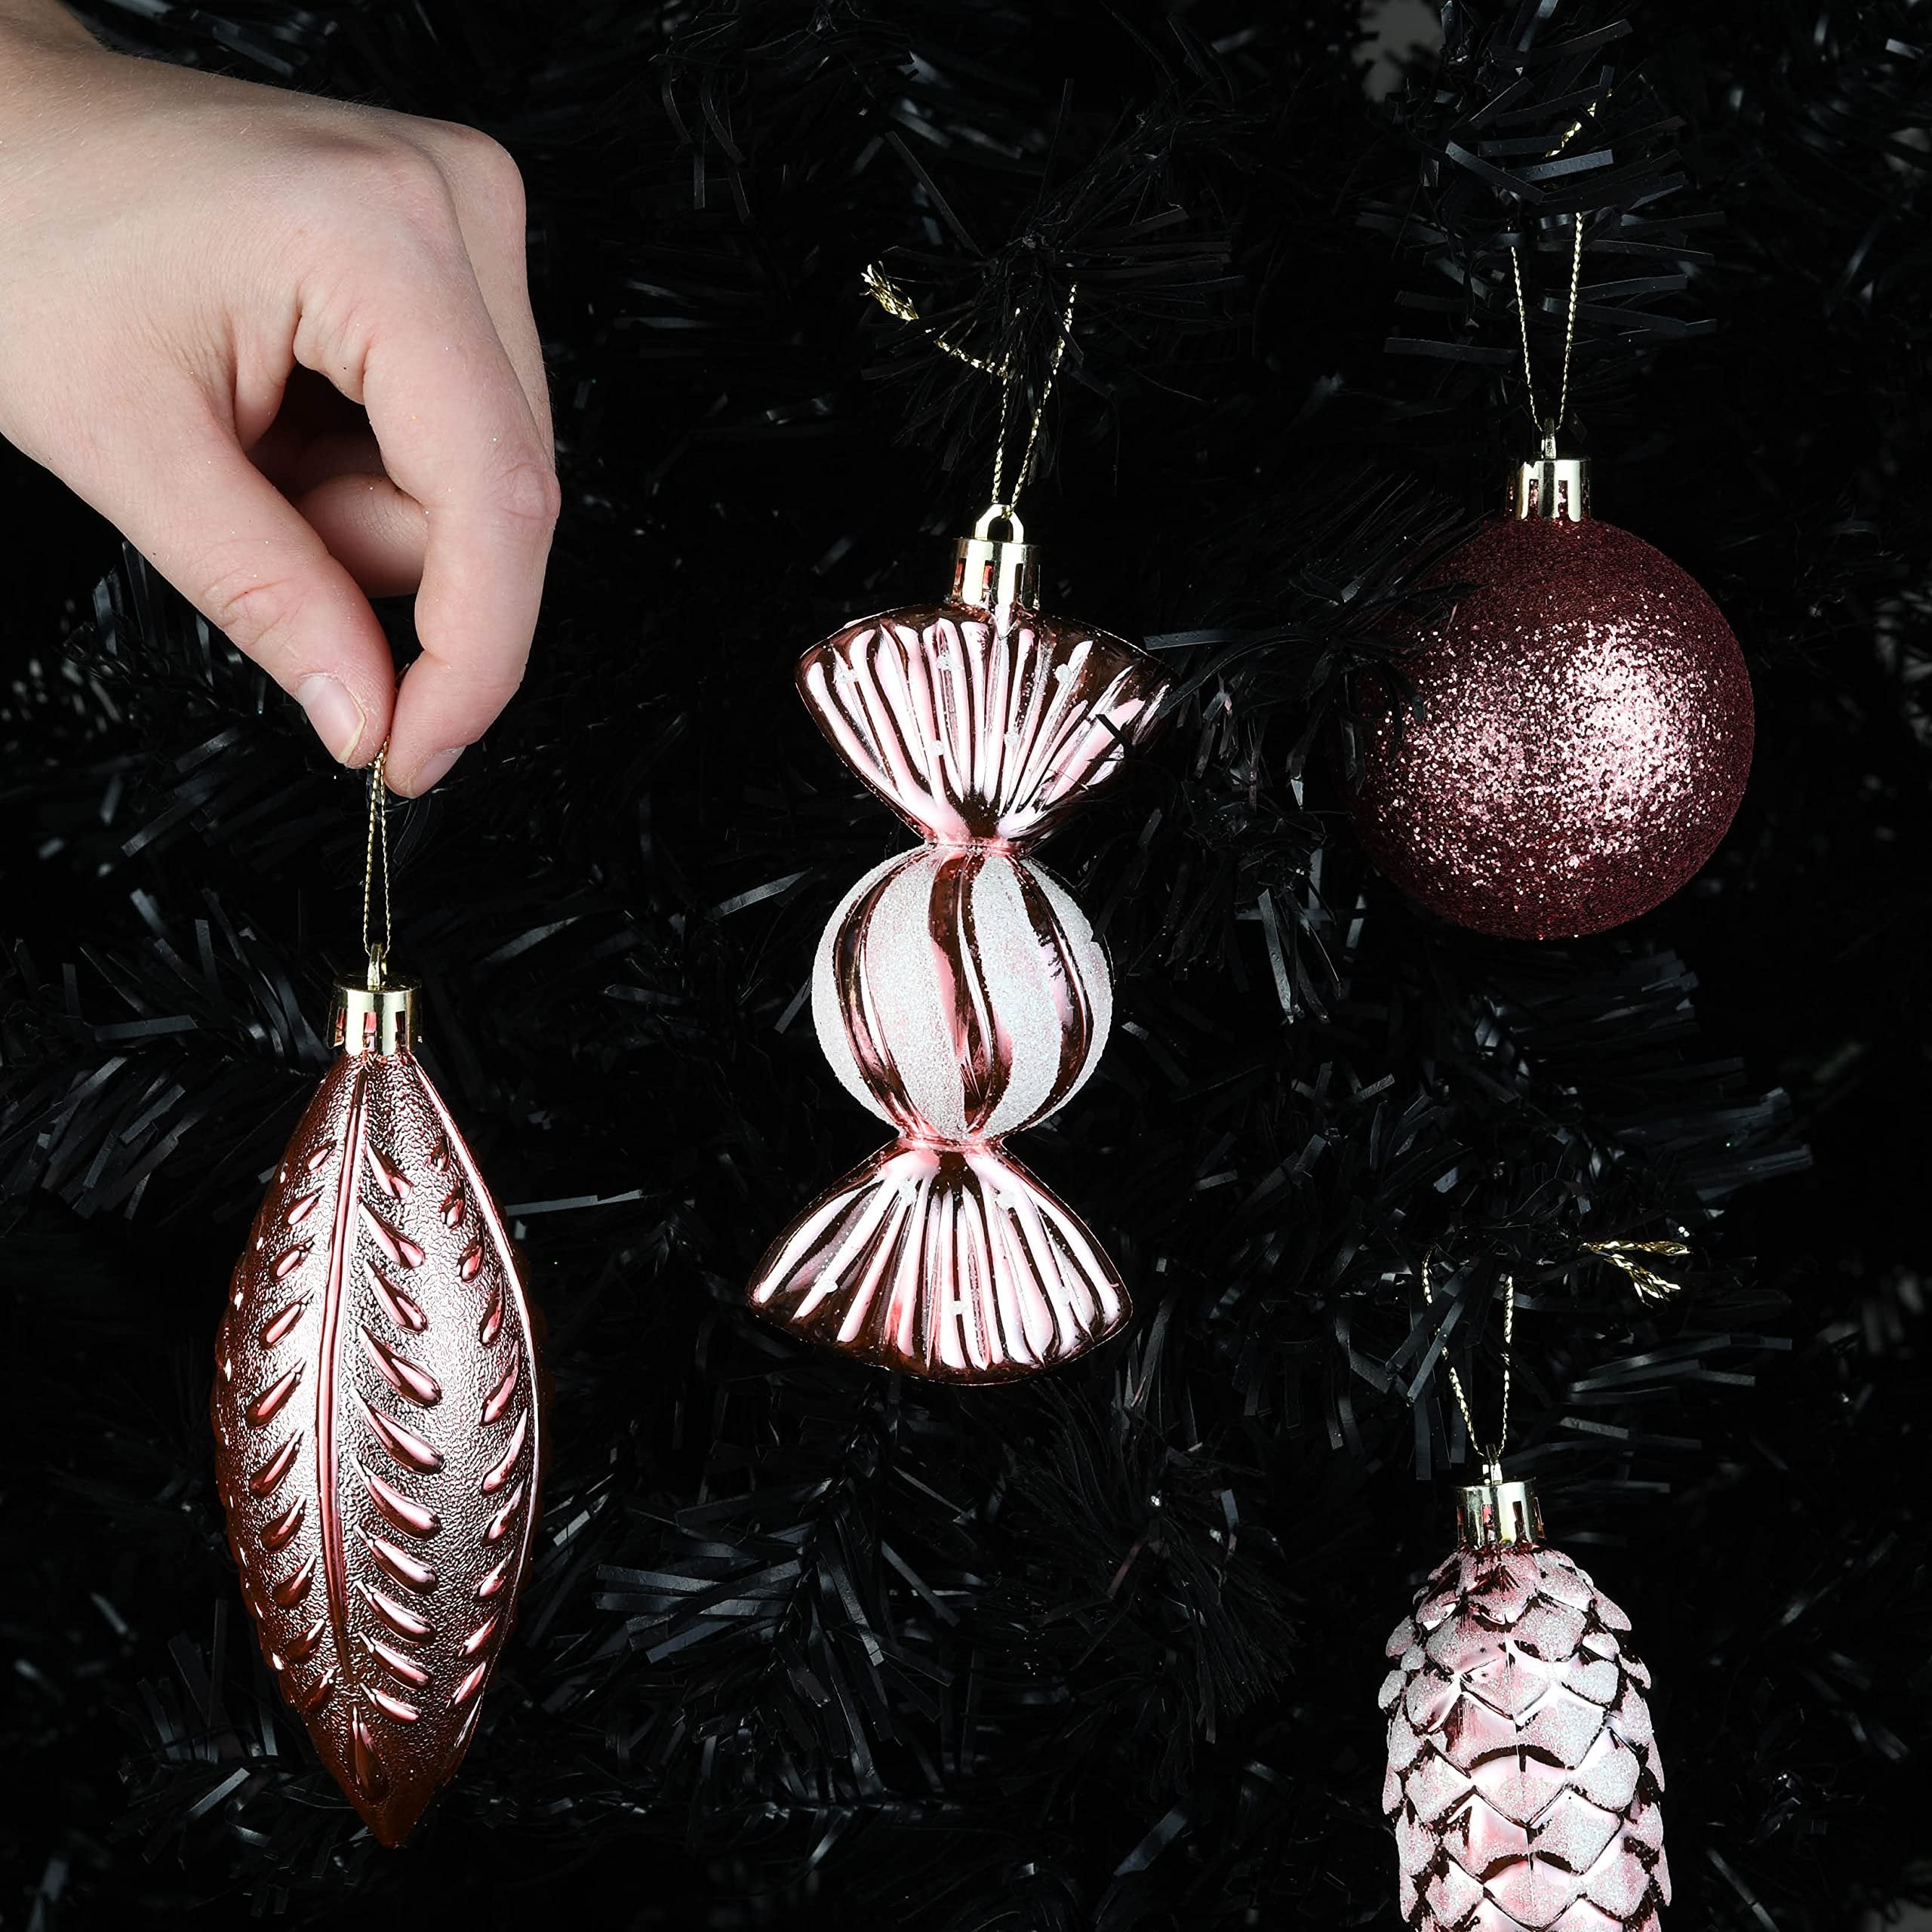 Prextex Rose Gold Christmas Ornaments Set (24pcs) - Shatterproof Balls for Tree, Wreath & Holiday Decor